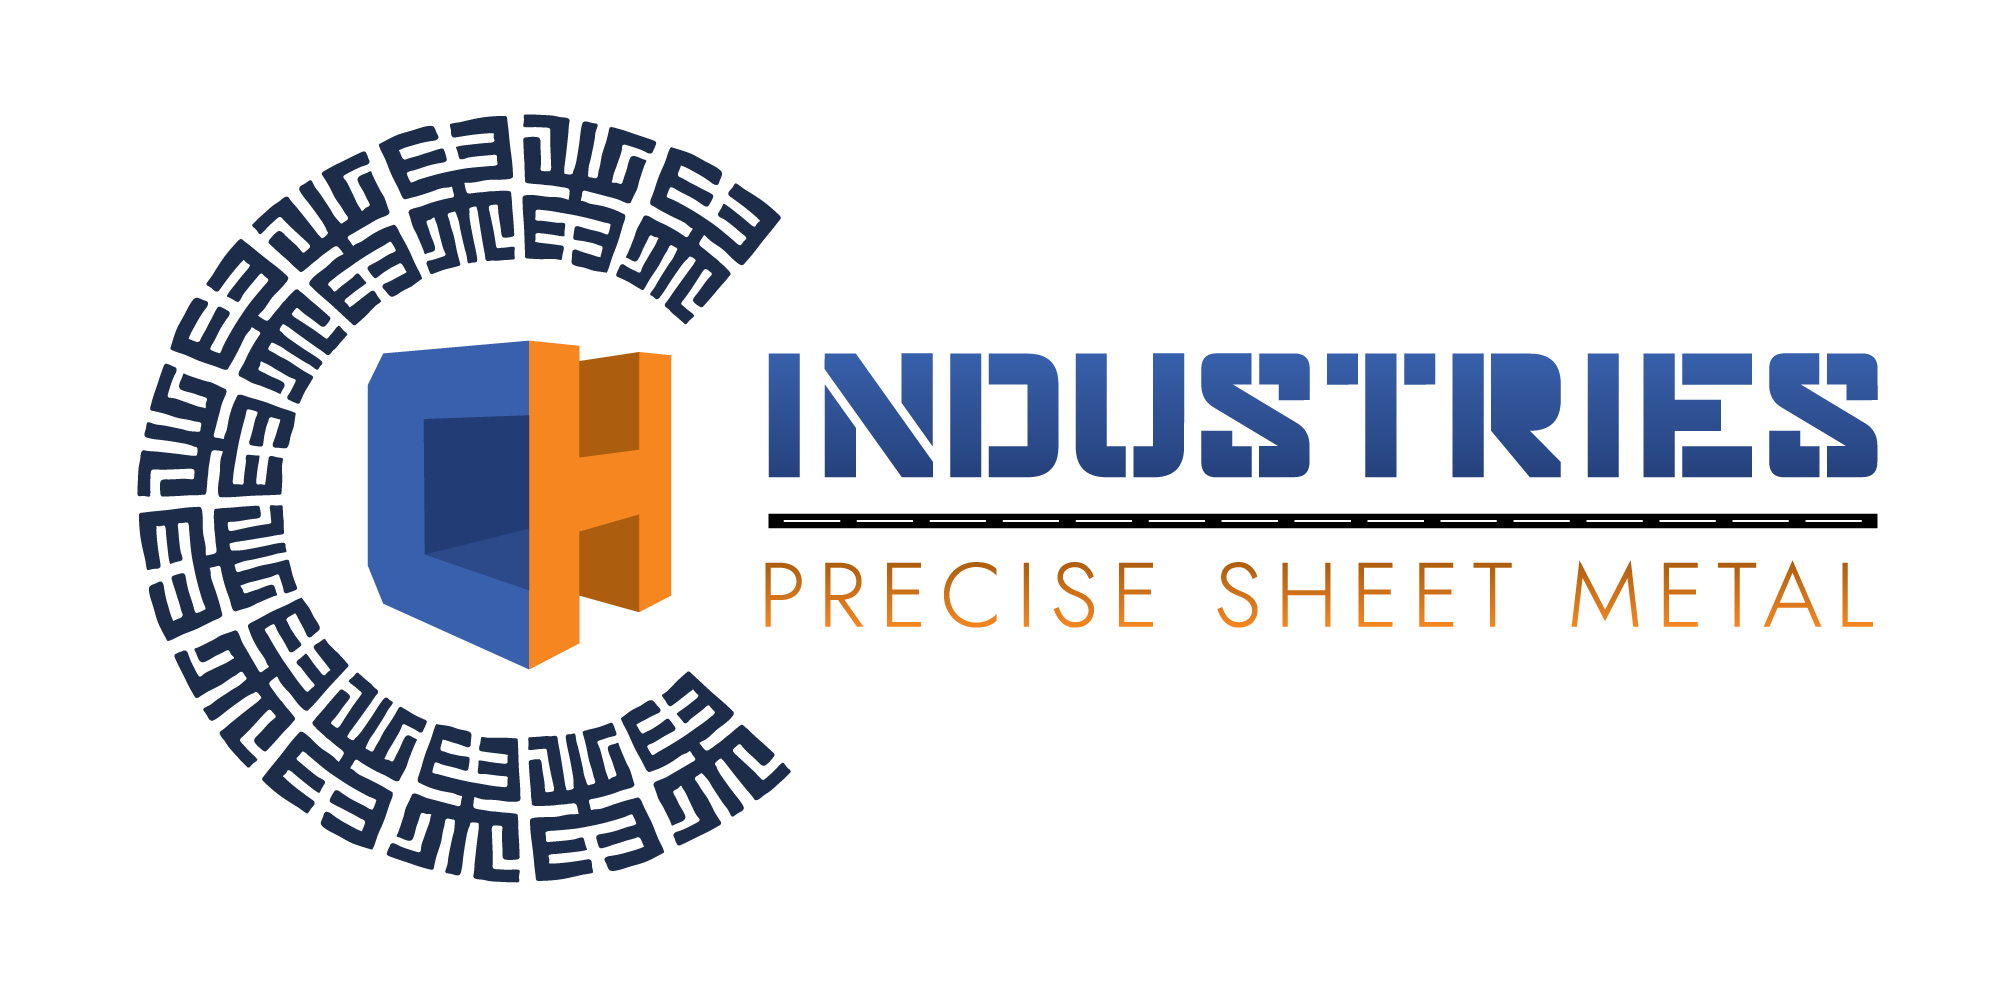 CH Industries Precision Sheet Metal Blue and Orange Logo